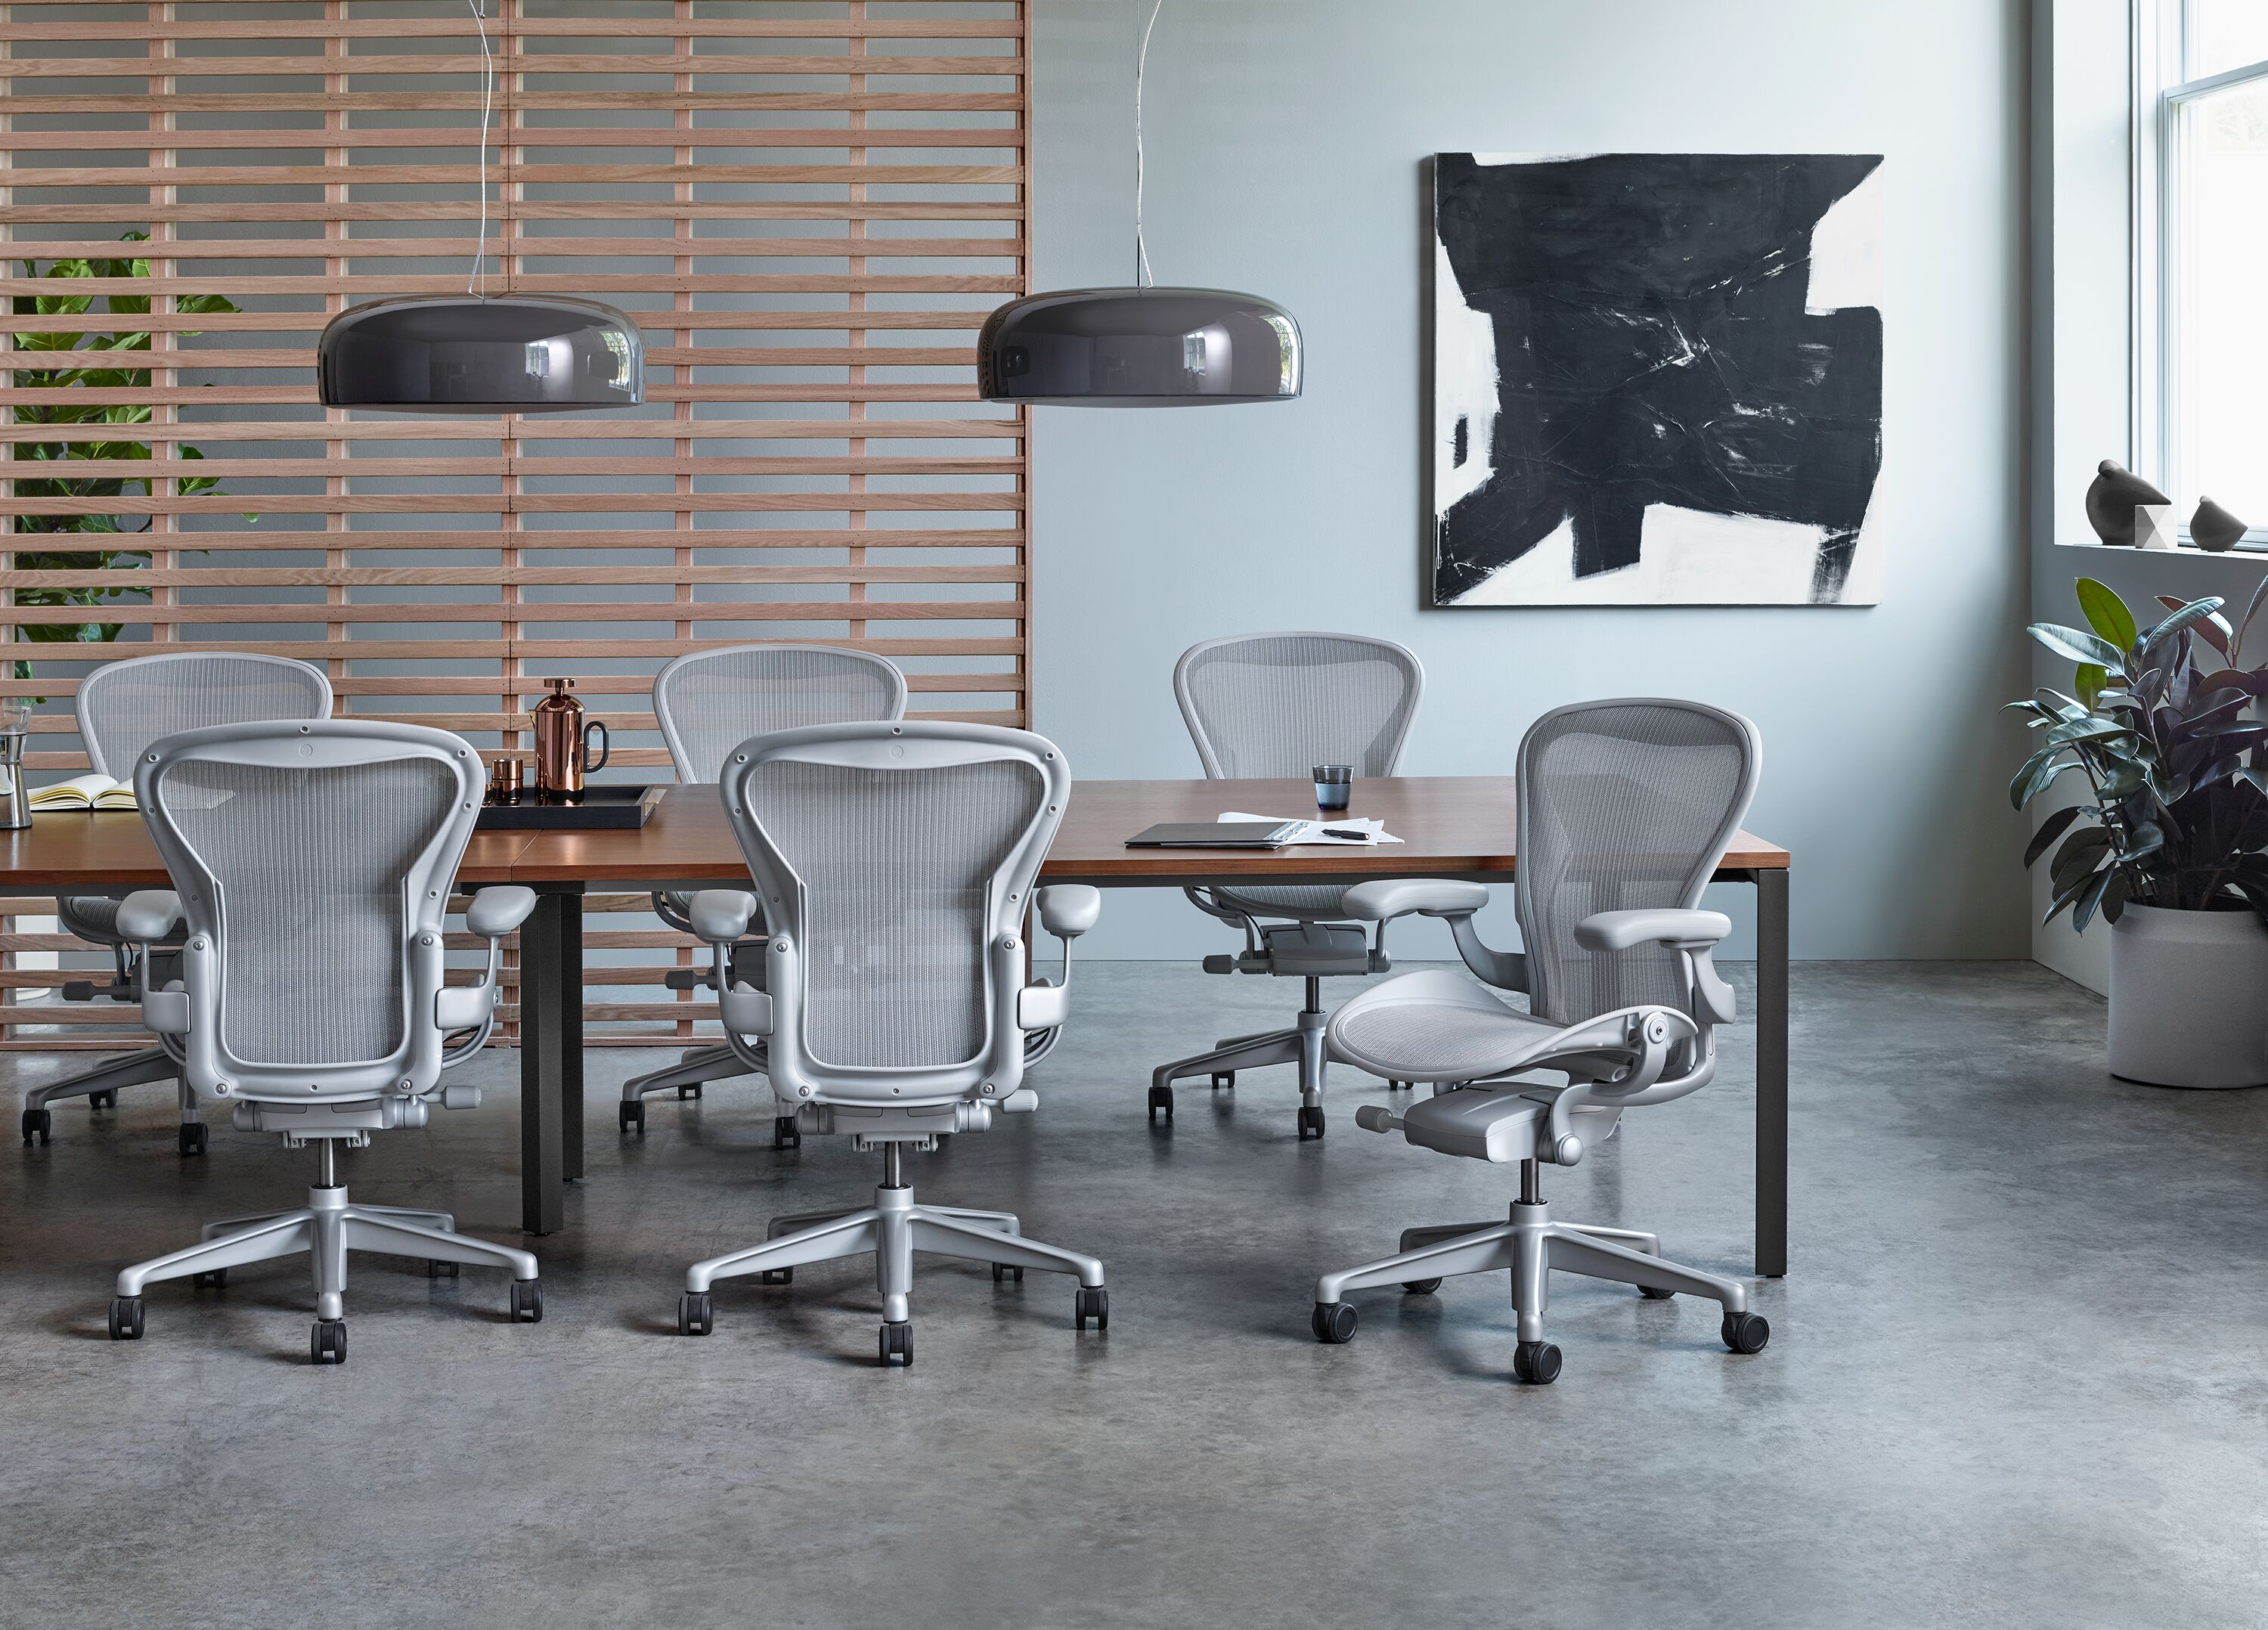 Aeron Chairs in a modern office.